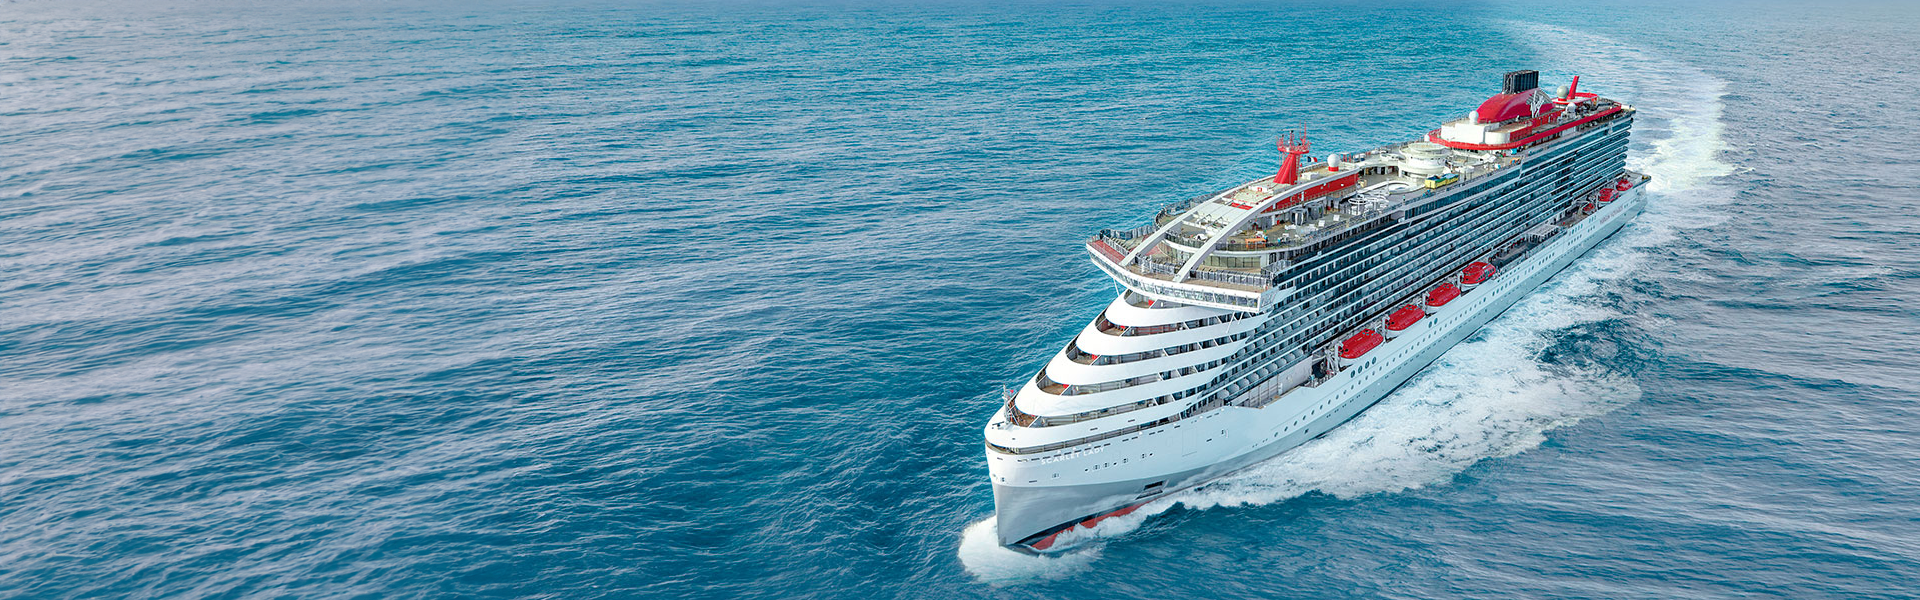 Futuristic, unconventional and innovative cruises!